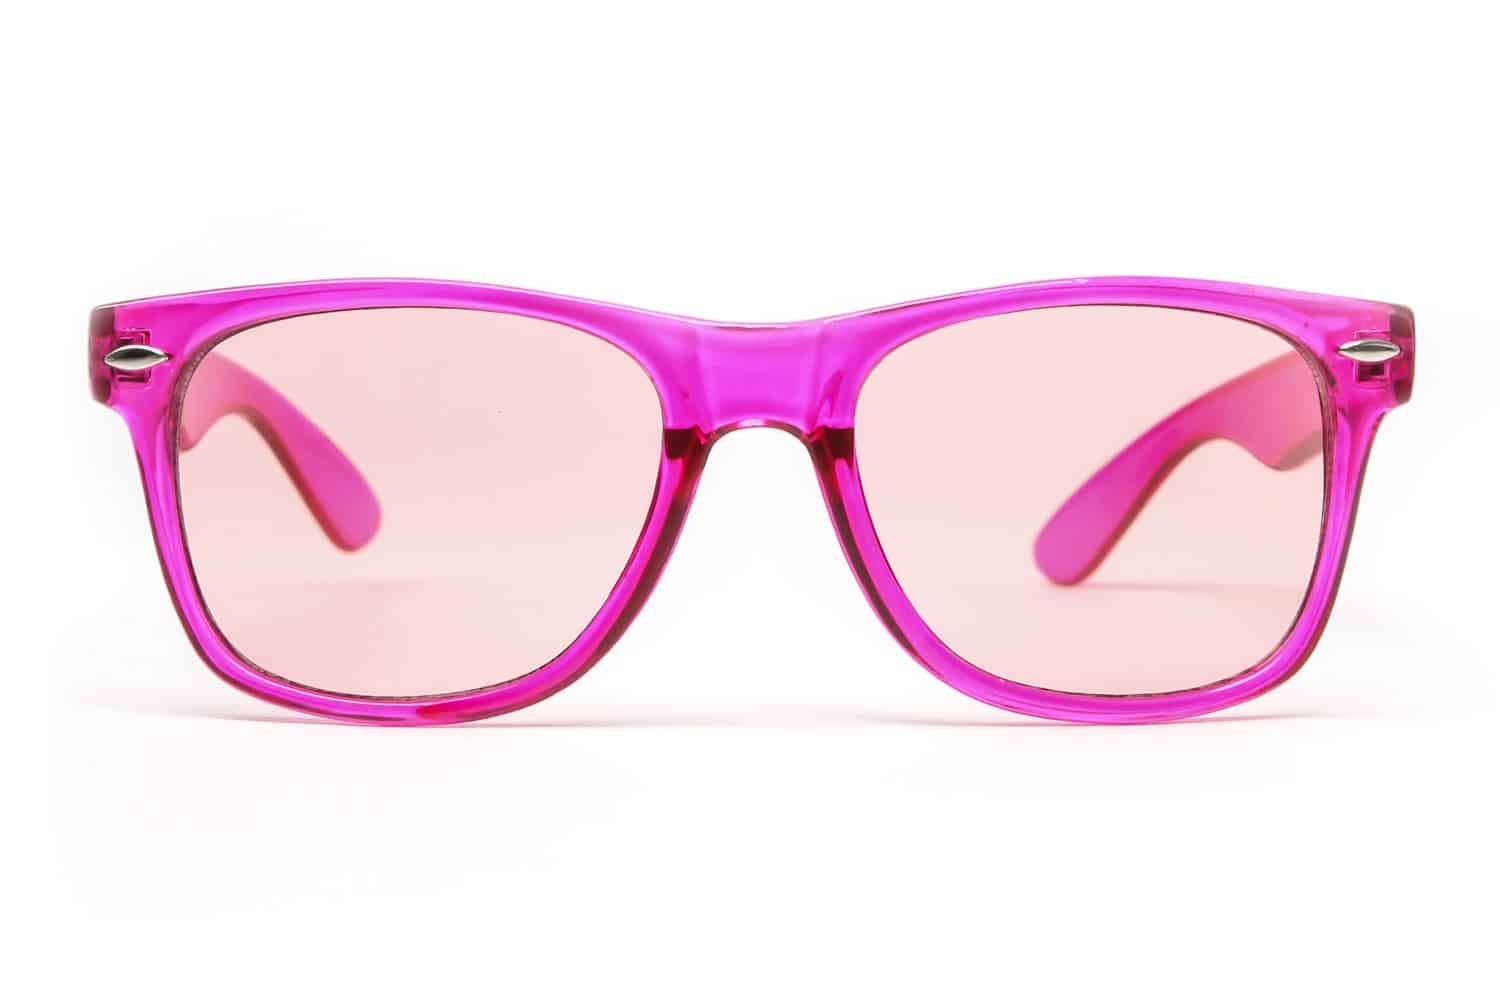 Pink glasses georges brassens